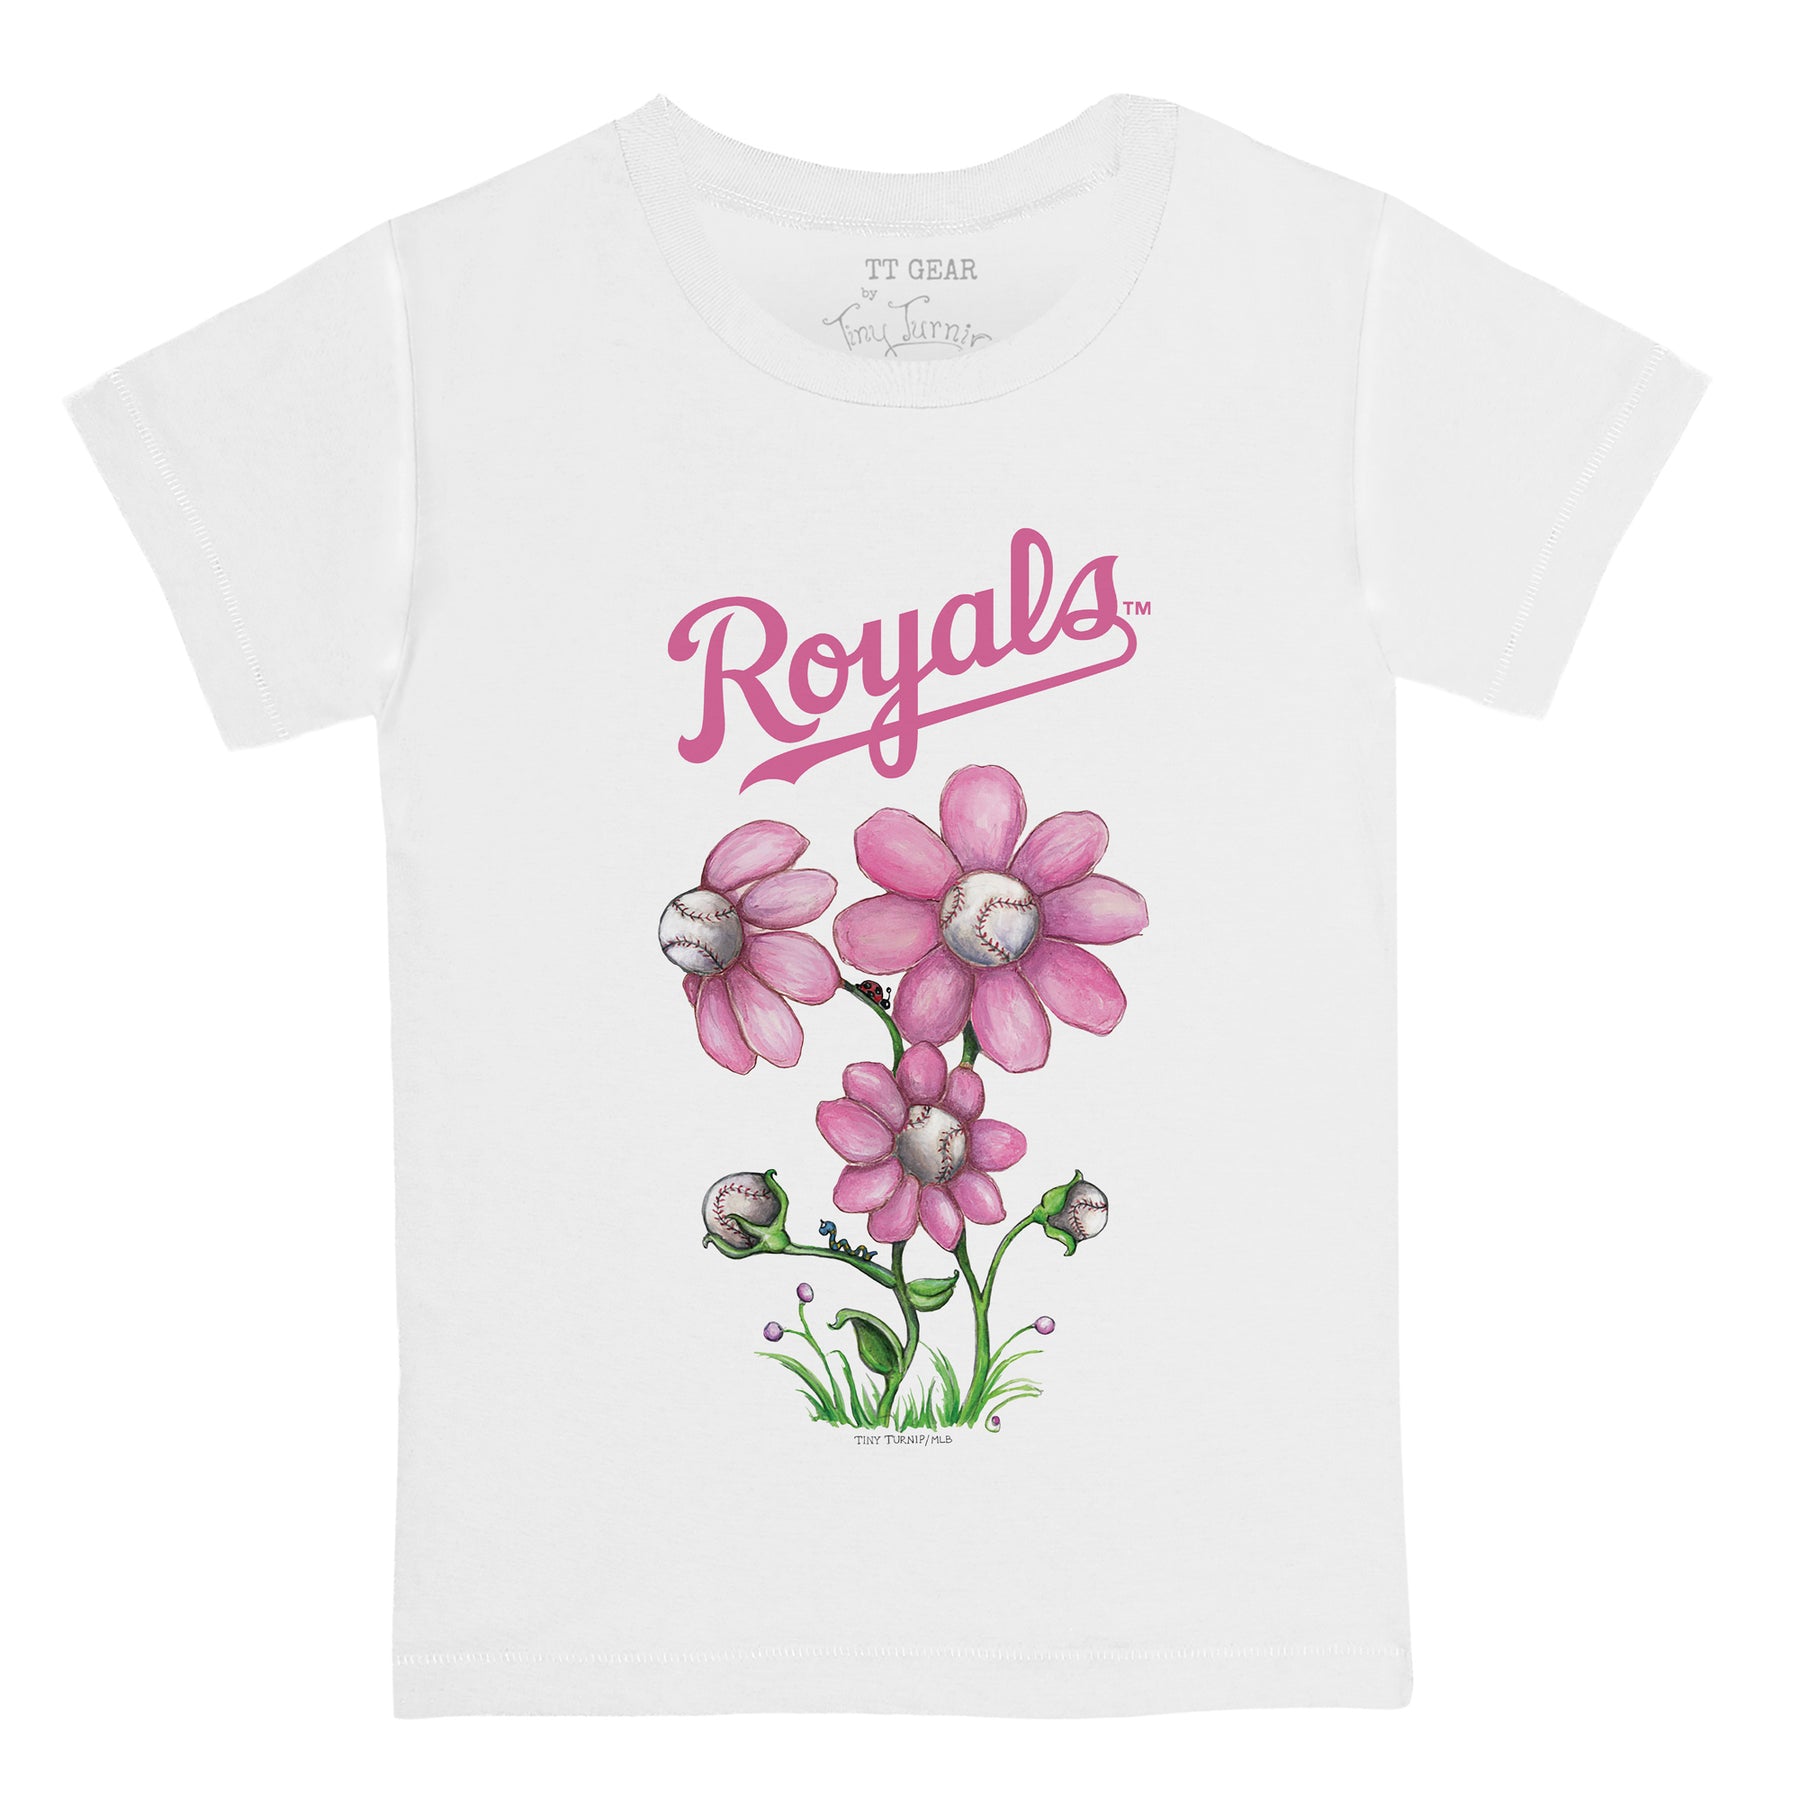 Kansas City Royals Youth V-Neck T-Shirt - White/Royal